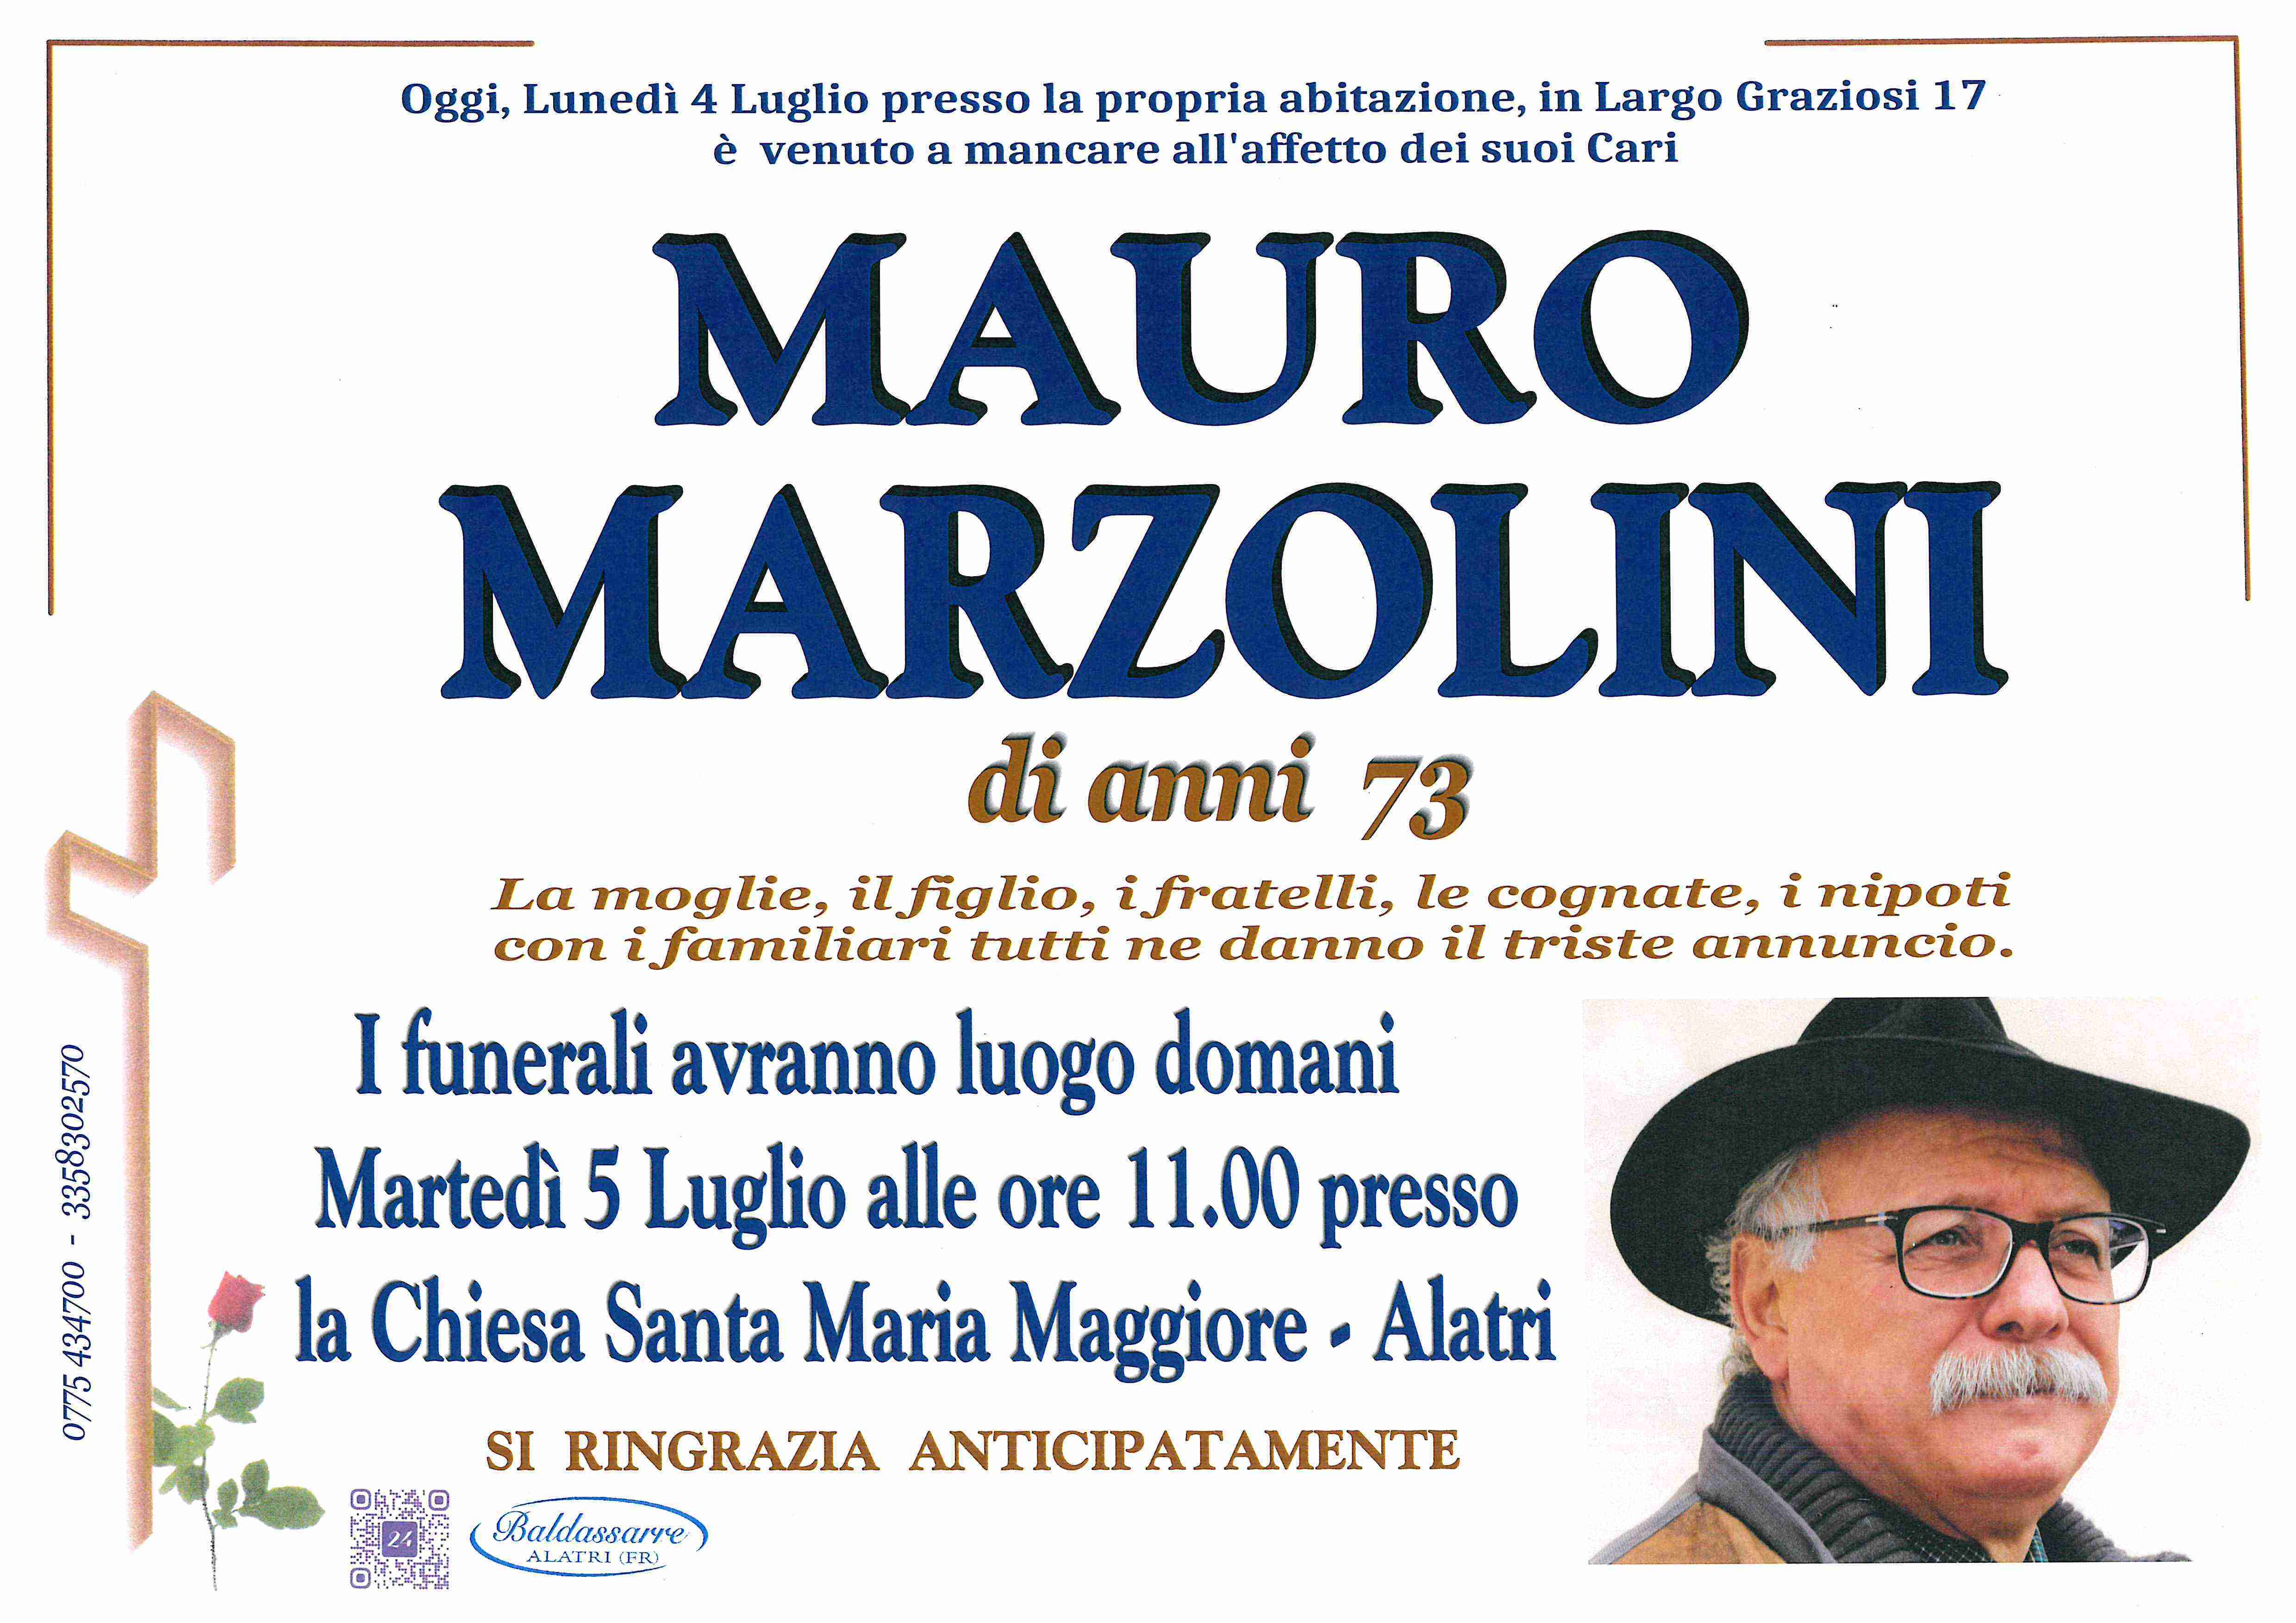 Mauro Marzolini